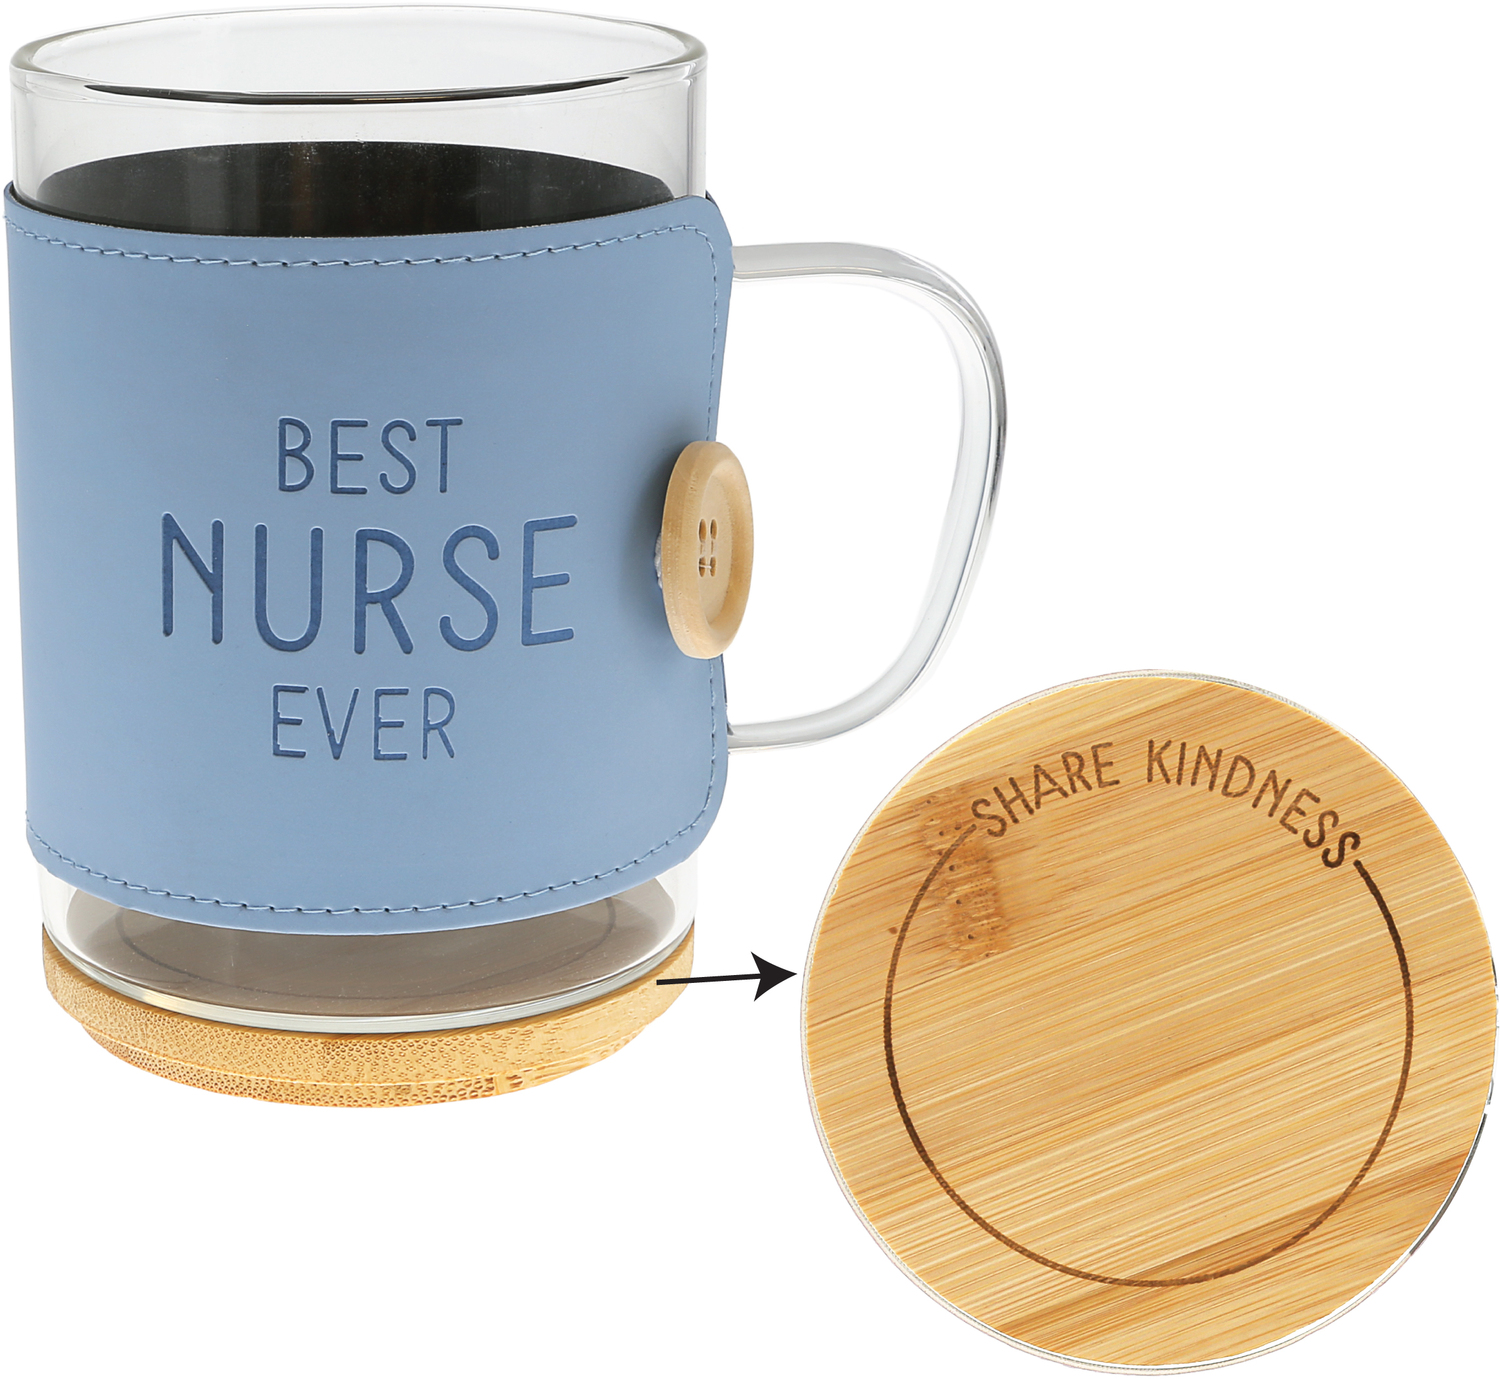 Nurse by Wrapped in Kindness - Nurse - 16 oz Wrapped Glass Mug with Coaster Lid